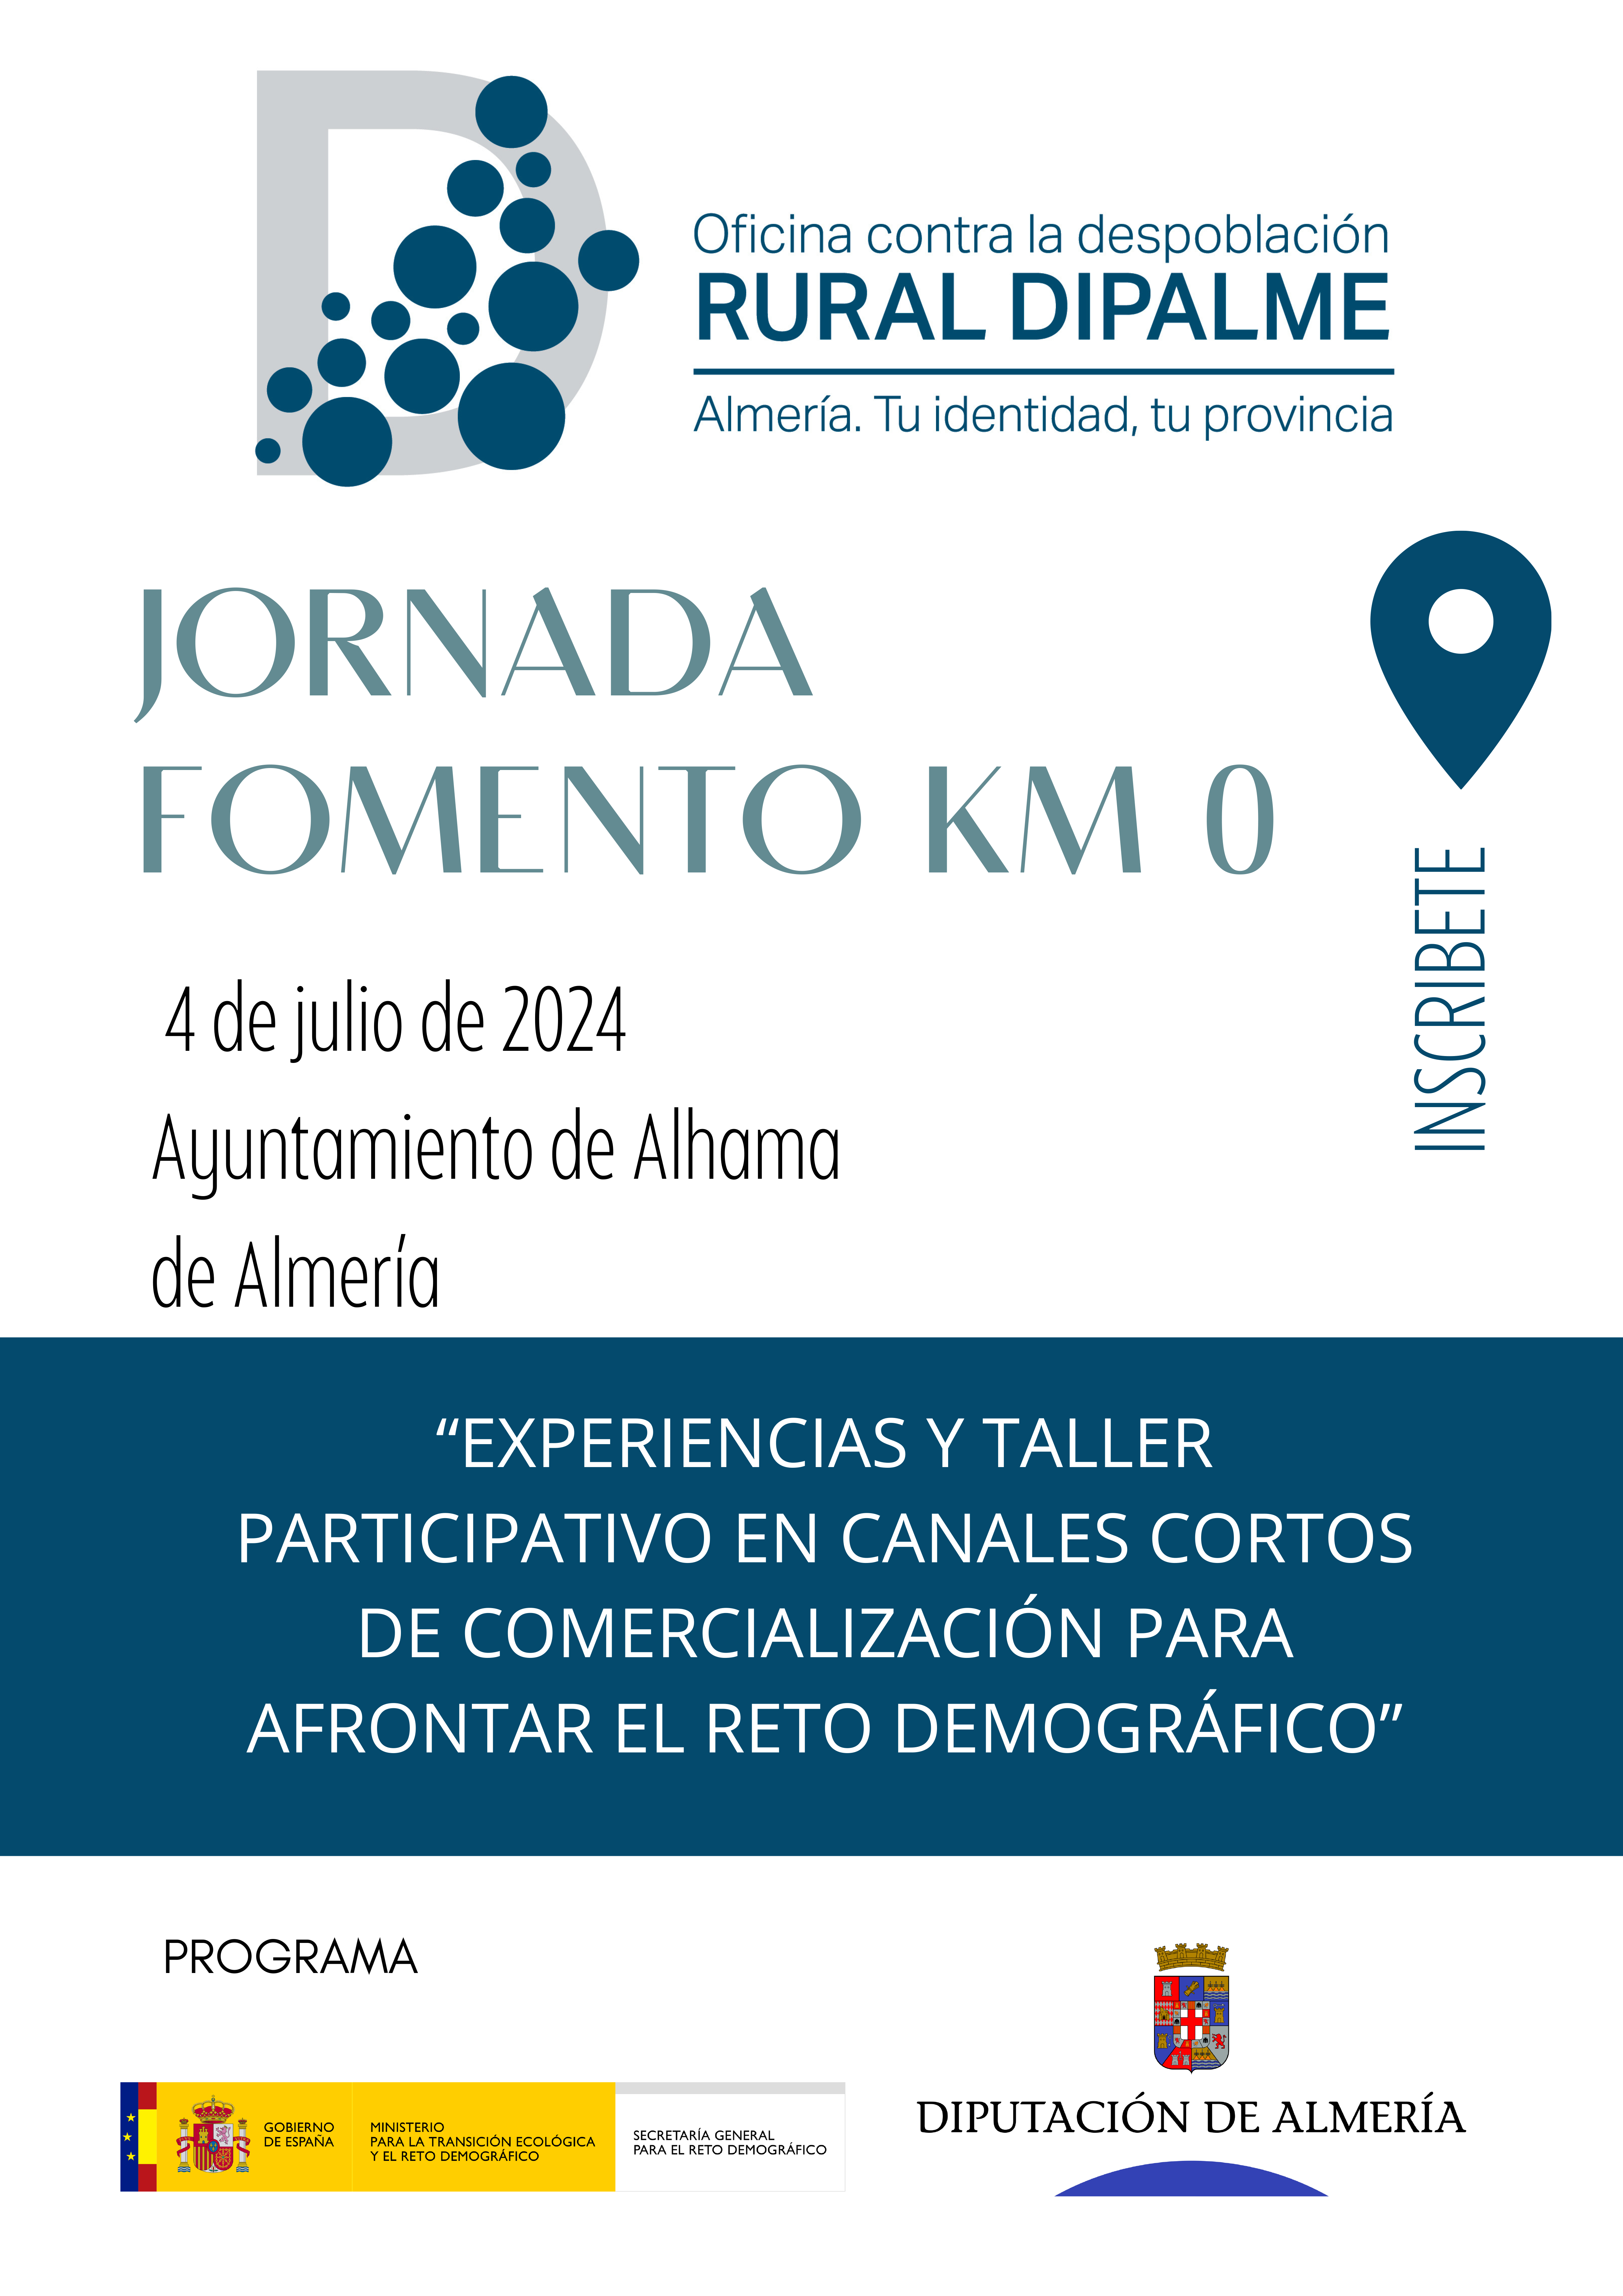 Jornada Fomento km 0 Alhama de Almería